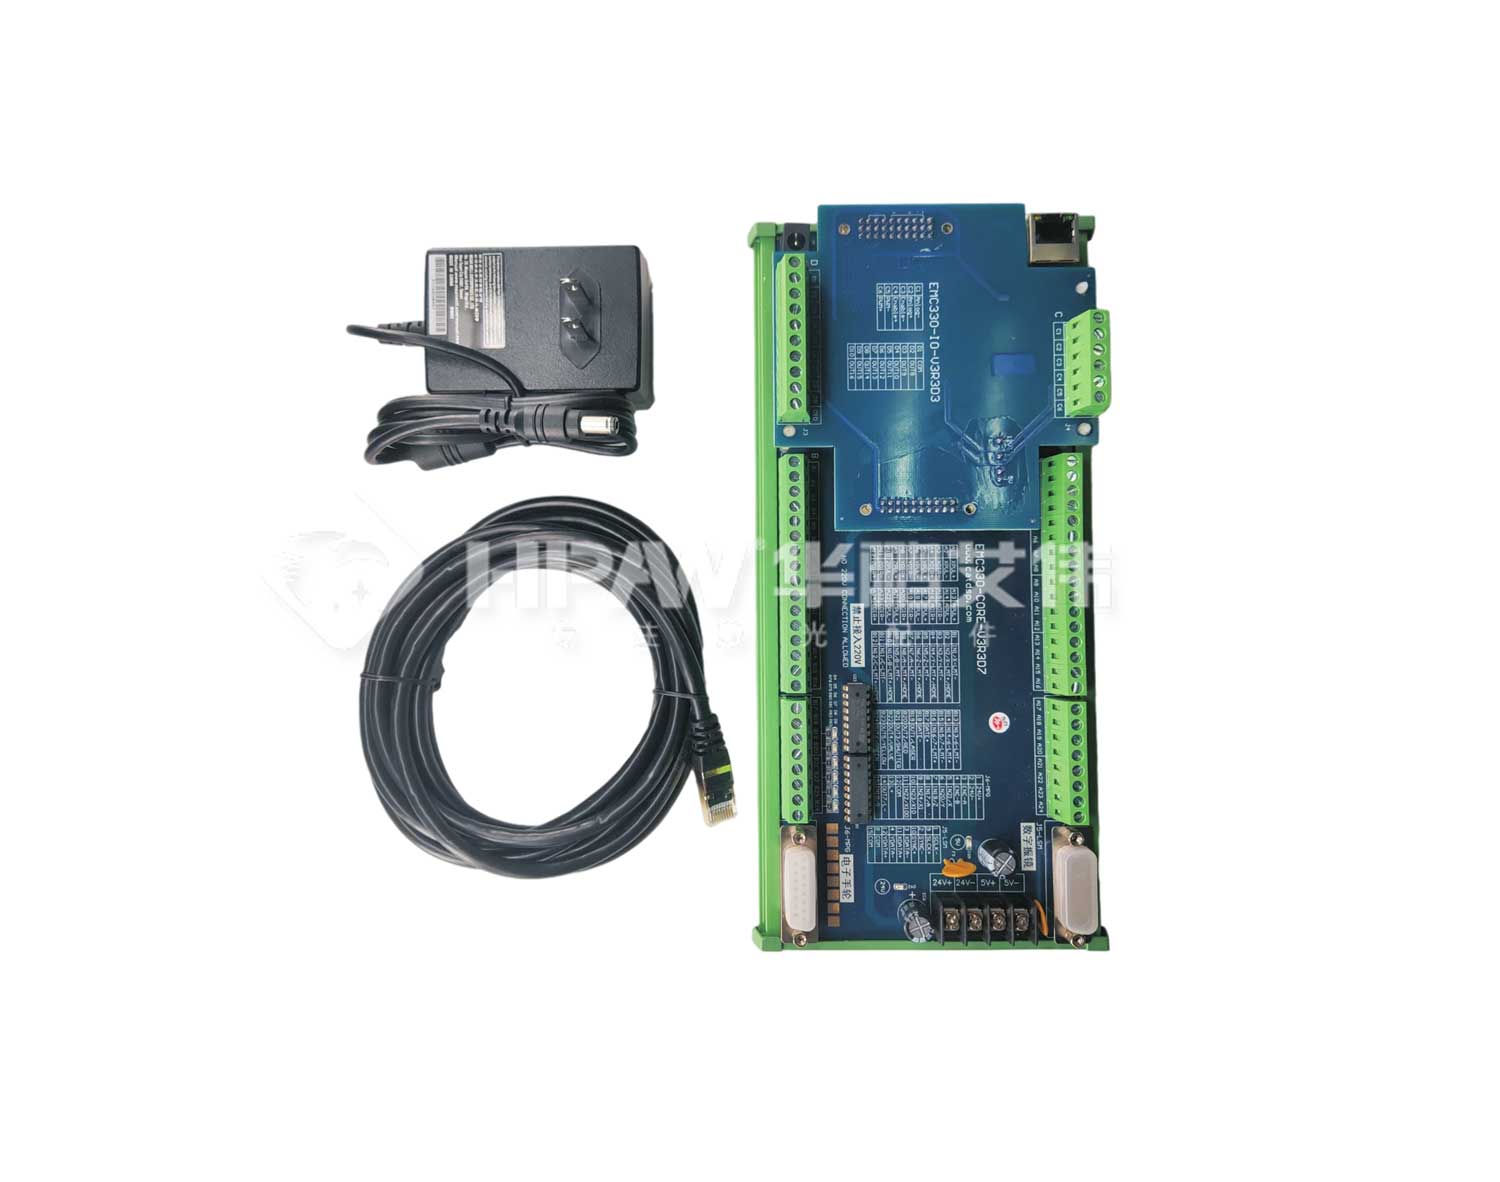 EMC330可控制振镜焊接卡